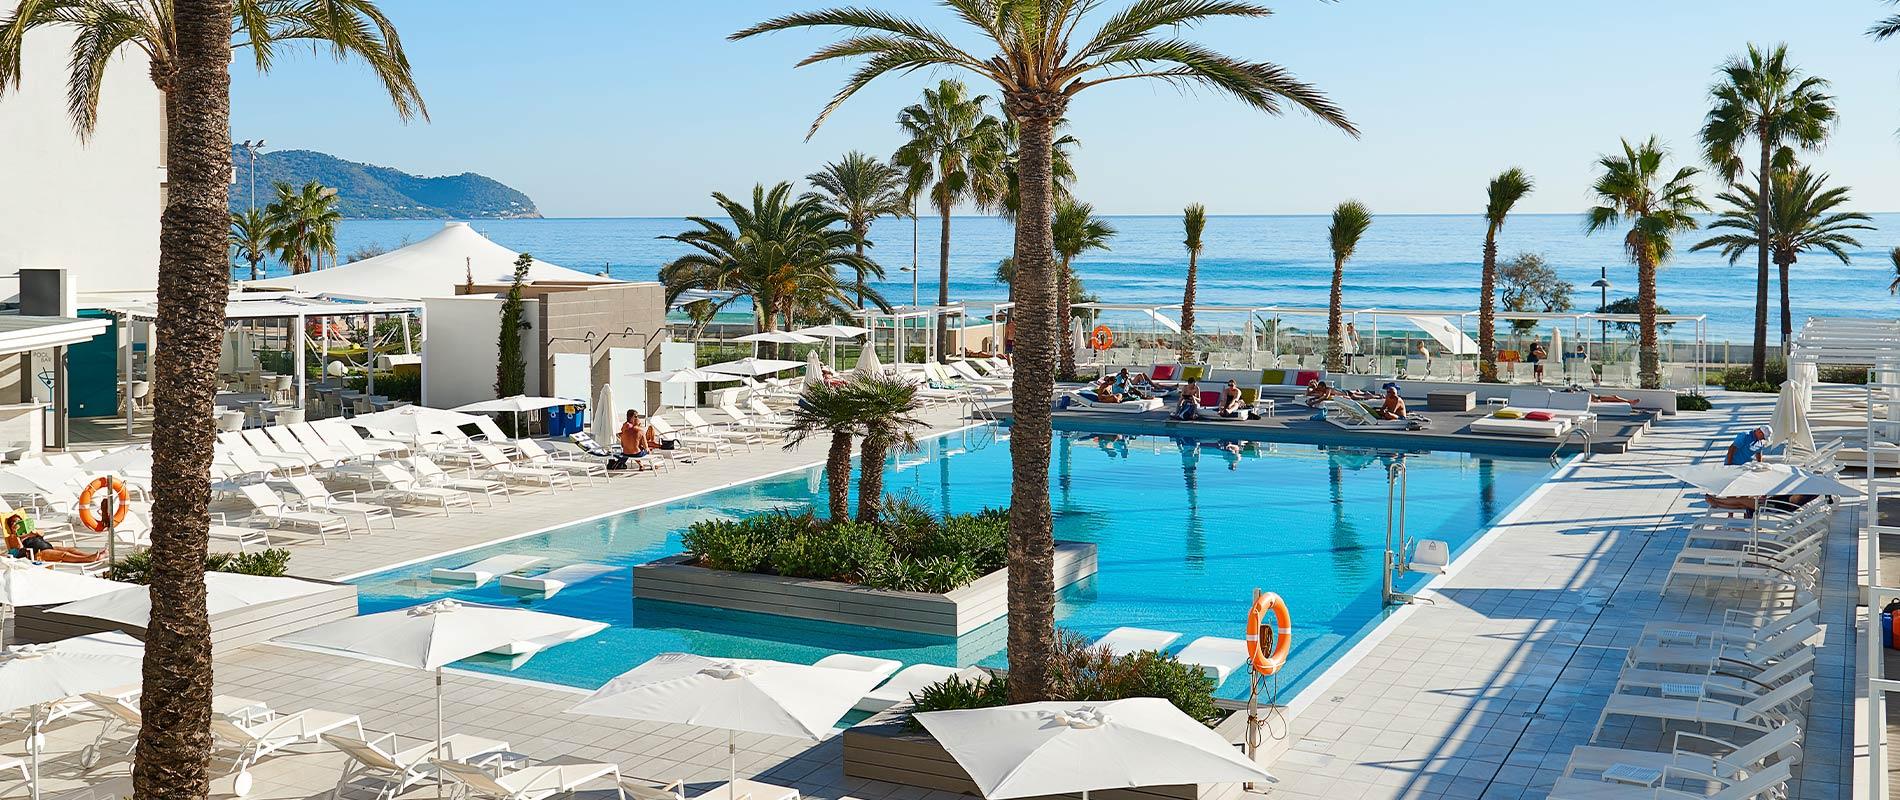 Protur Playa Cala Millor Hotel - 4 Estrellas - Cala Millor - Mallorca